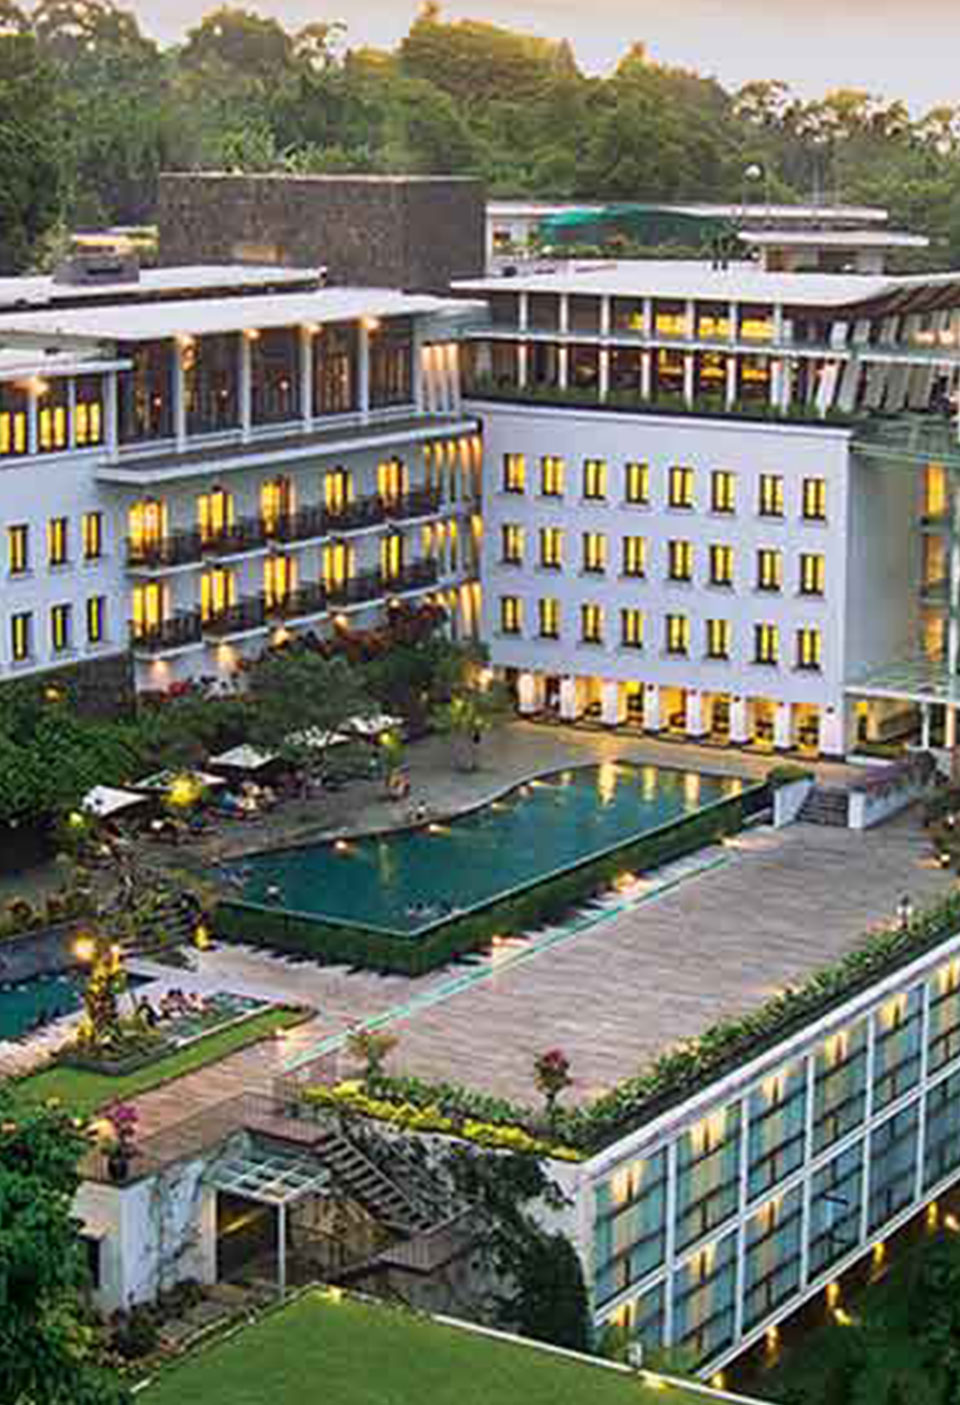 Hotel Padma Bandung